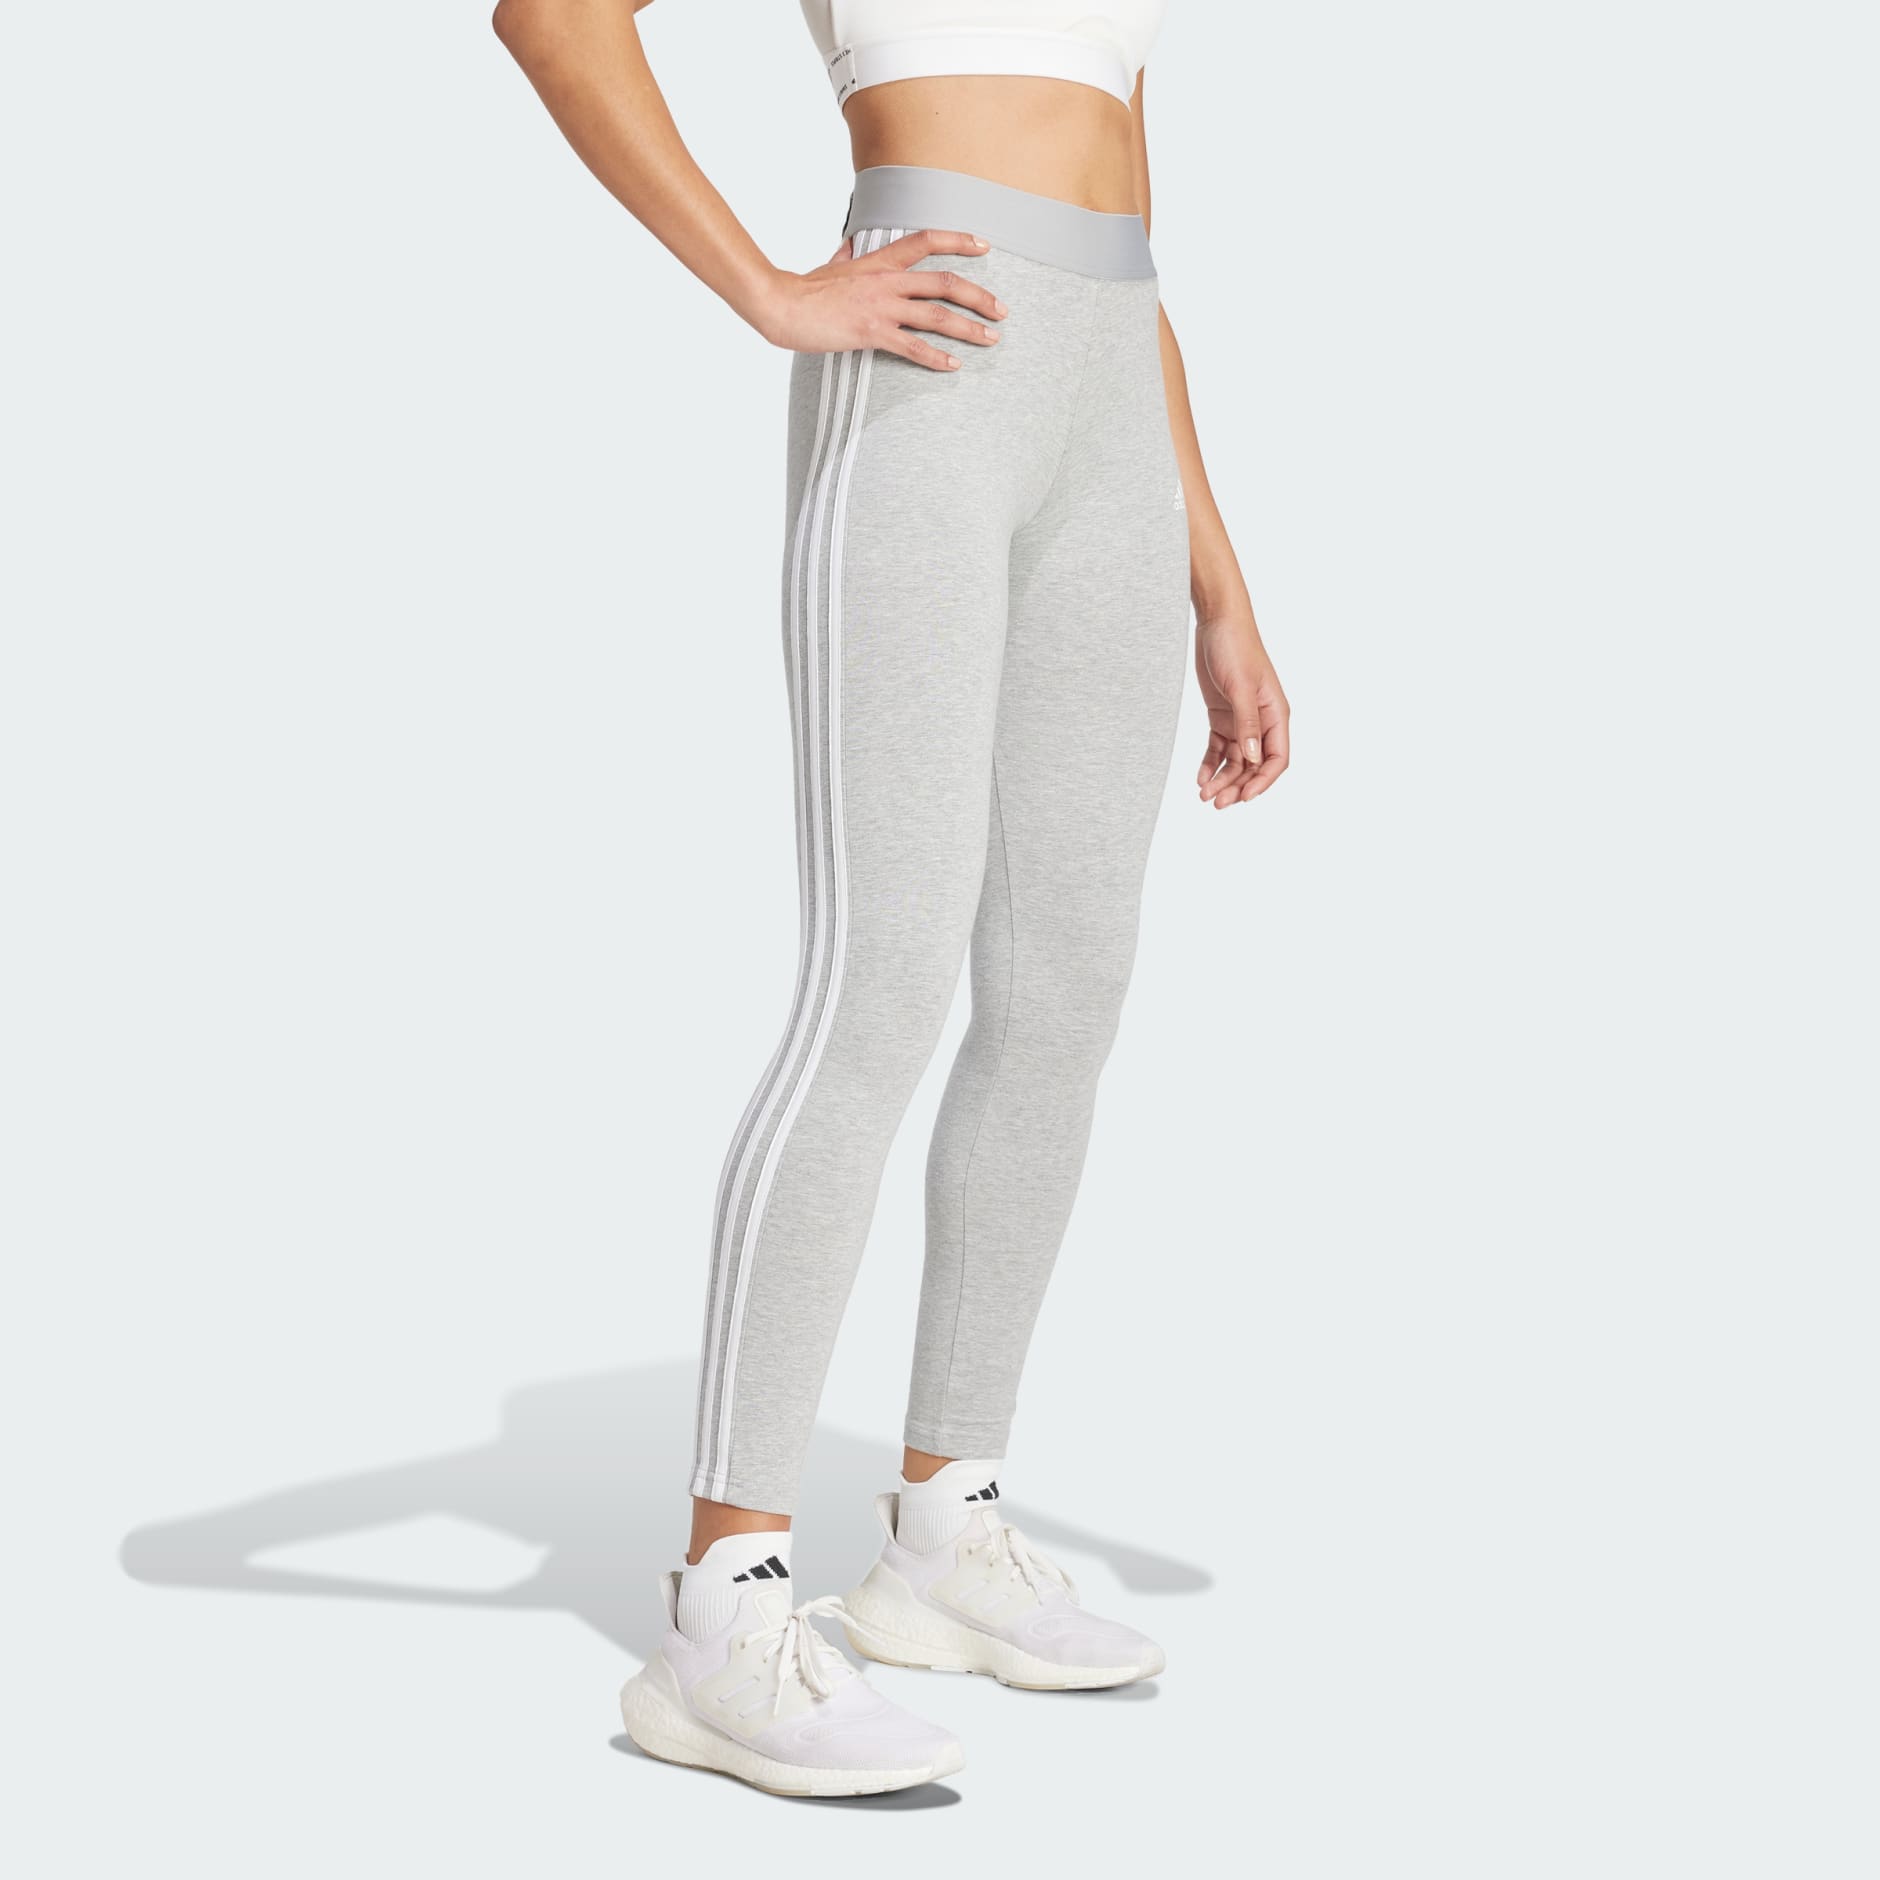 Women's Clothing - 3 Stripes Leggings - Grey